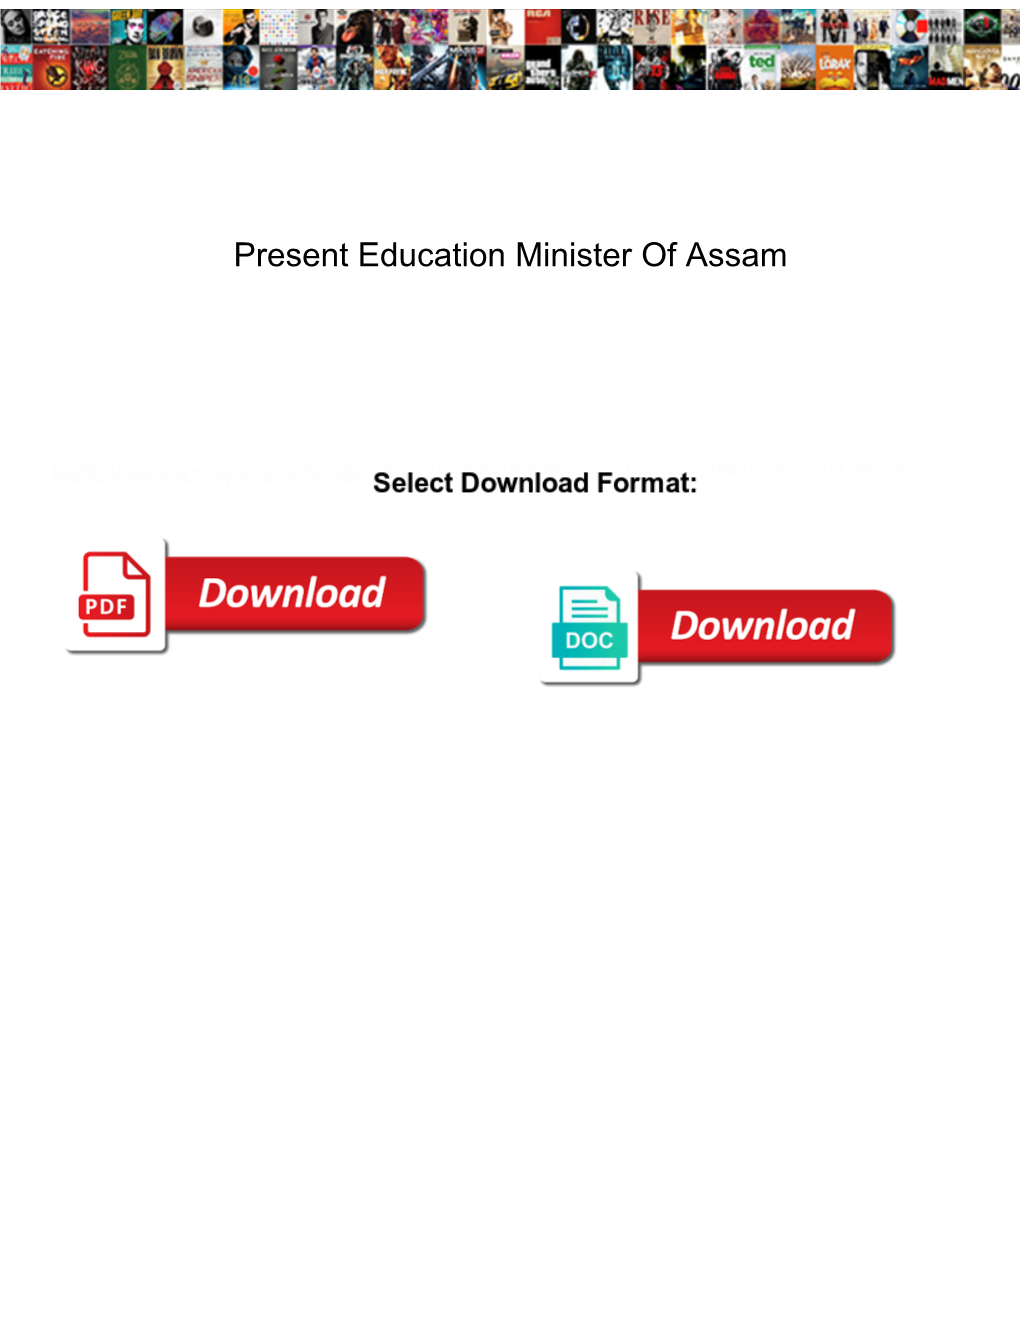 Present Education Minister of Assam